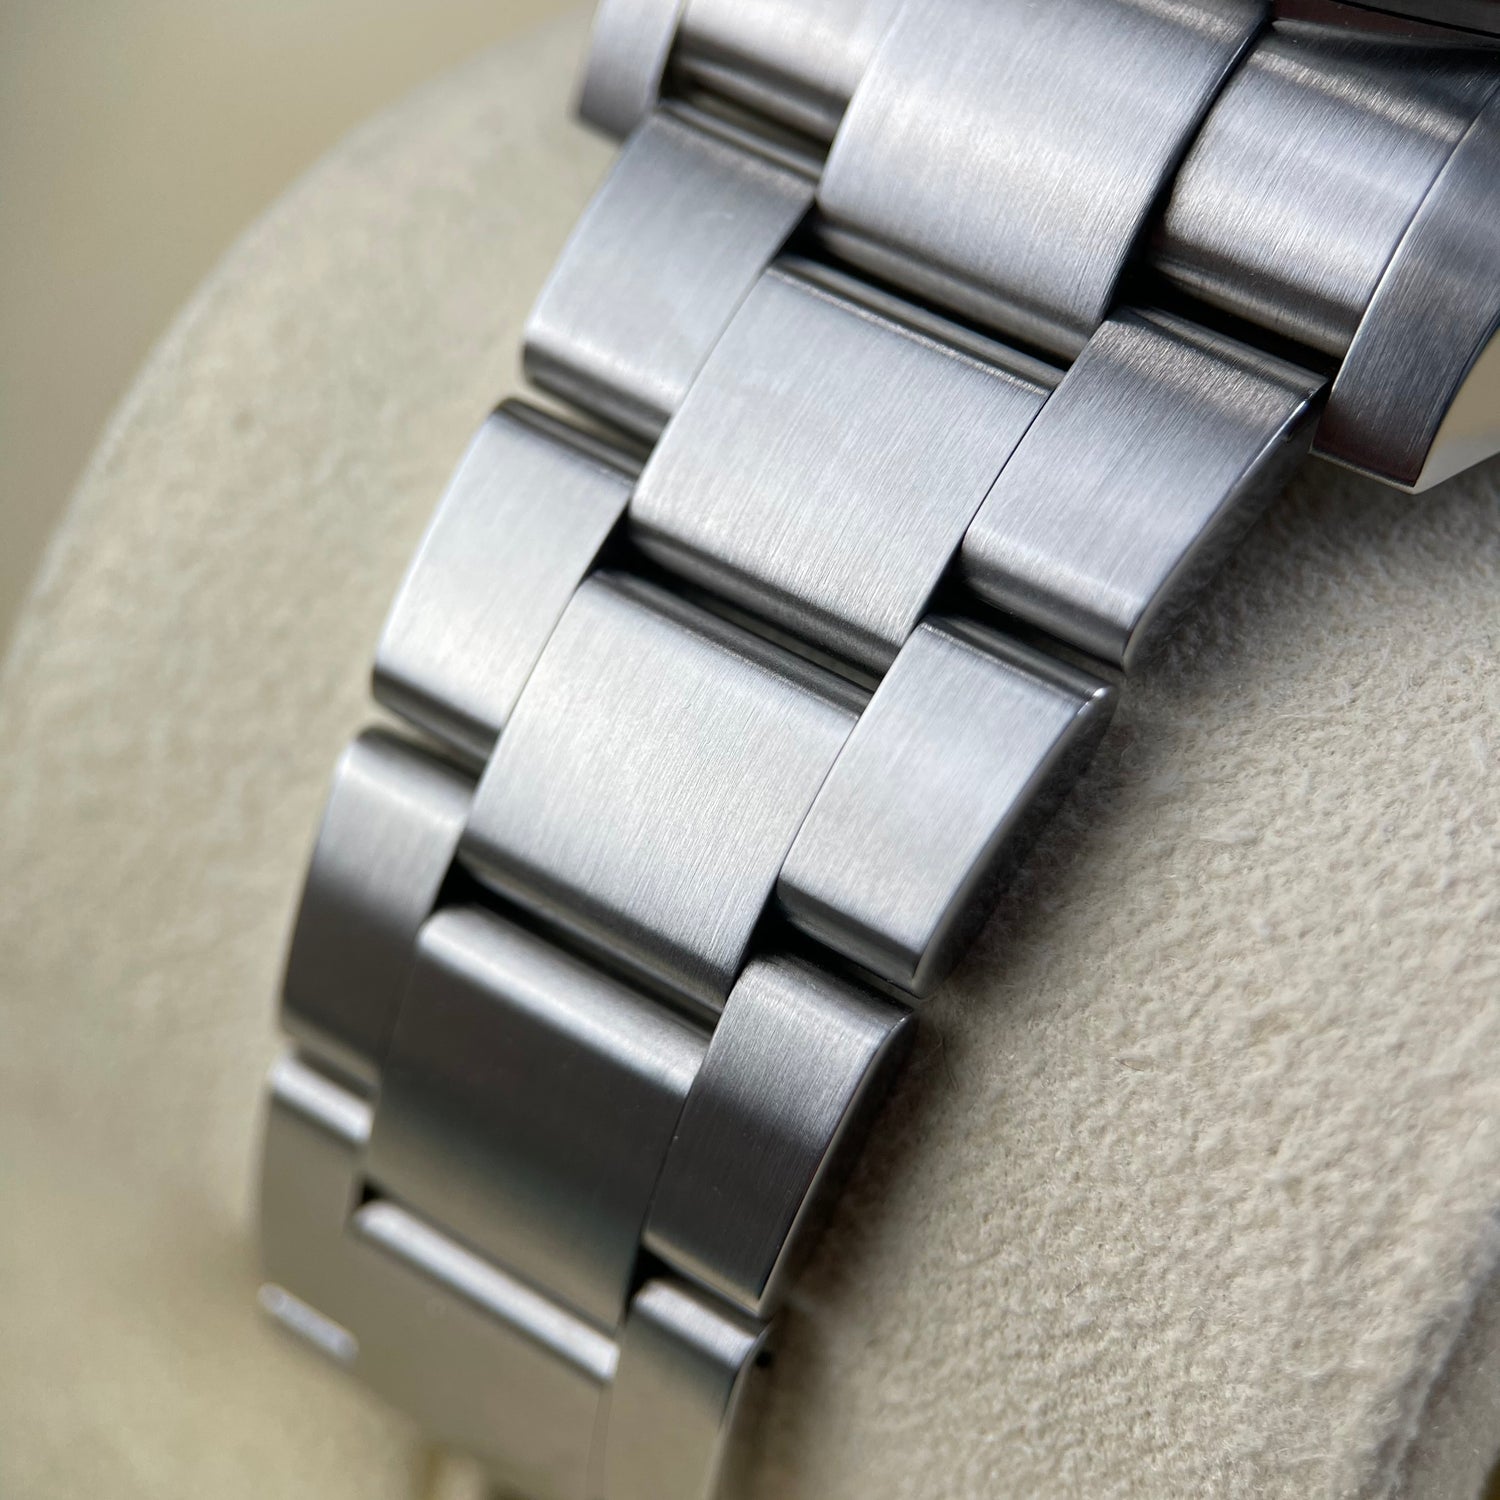 Rolex DeepSea James Cameron 126660 2020 Mint Condition Full Set Watch